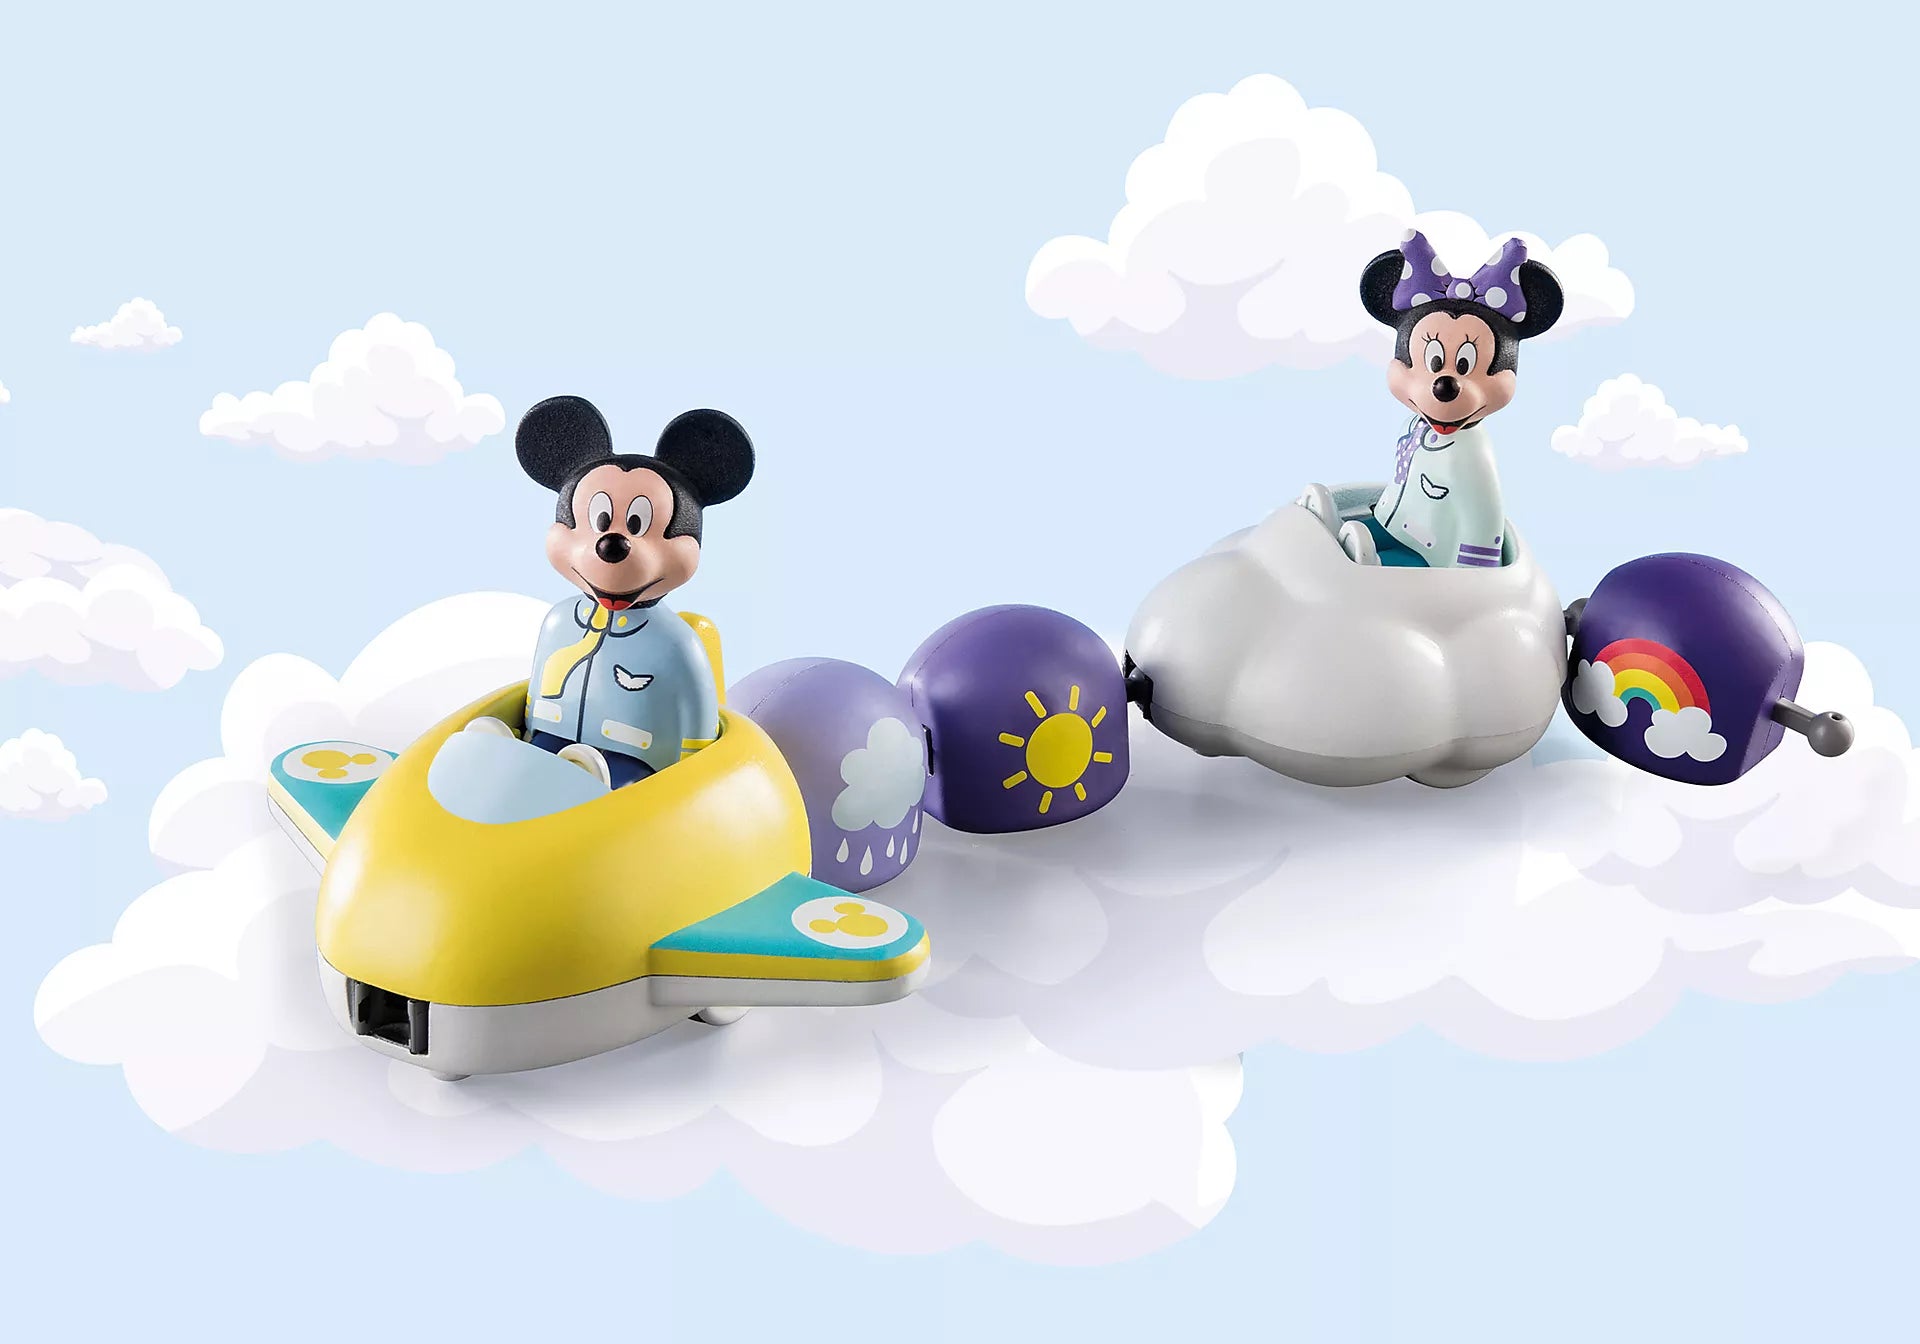 Disney: Mickey's & Minnie's Cloud Ride (#71320)